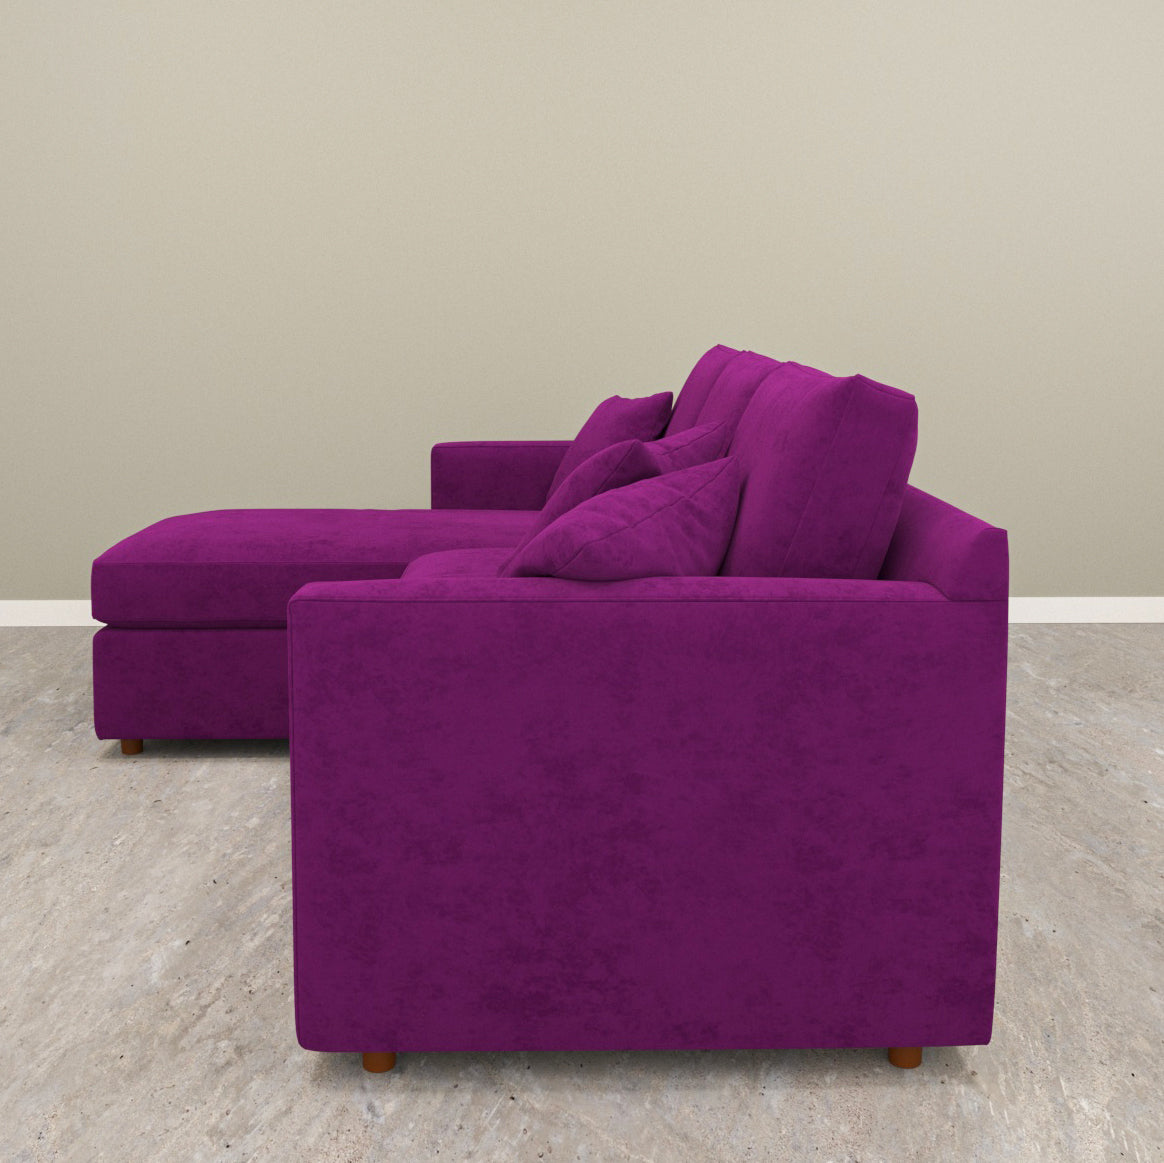 Premium Purple Coloured with Premium Comfort L Shaped 4 Seater Sofa Set for Home Sofa